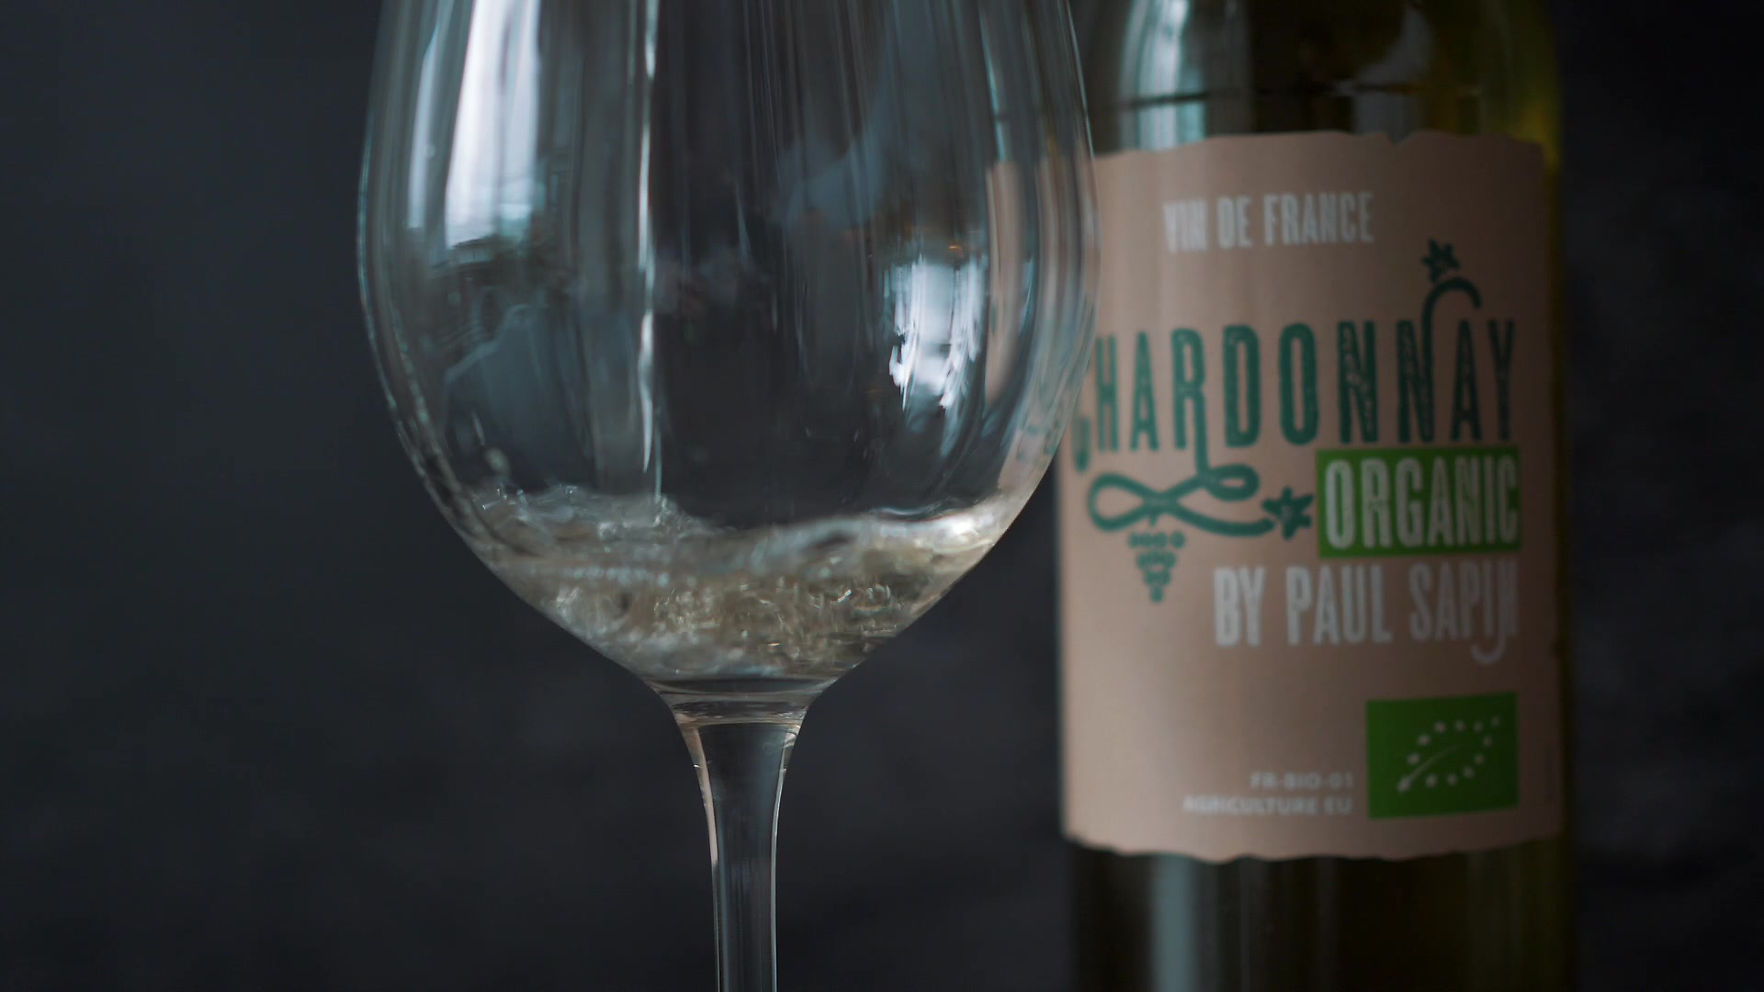 Chardonnay Organic by Paul Sapin 2019